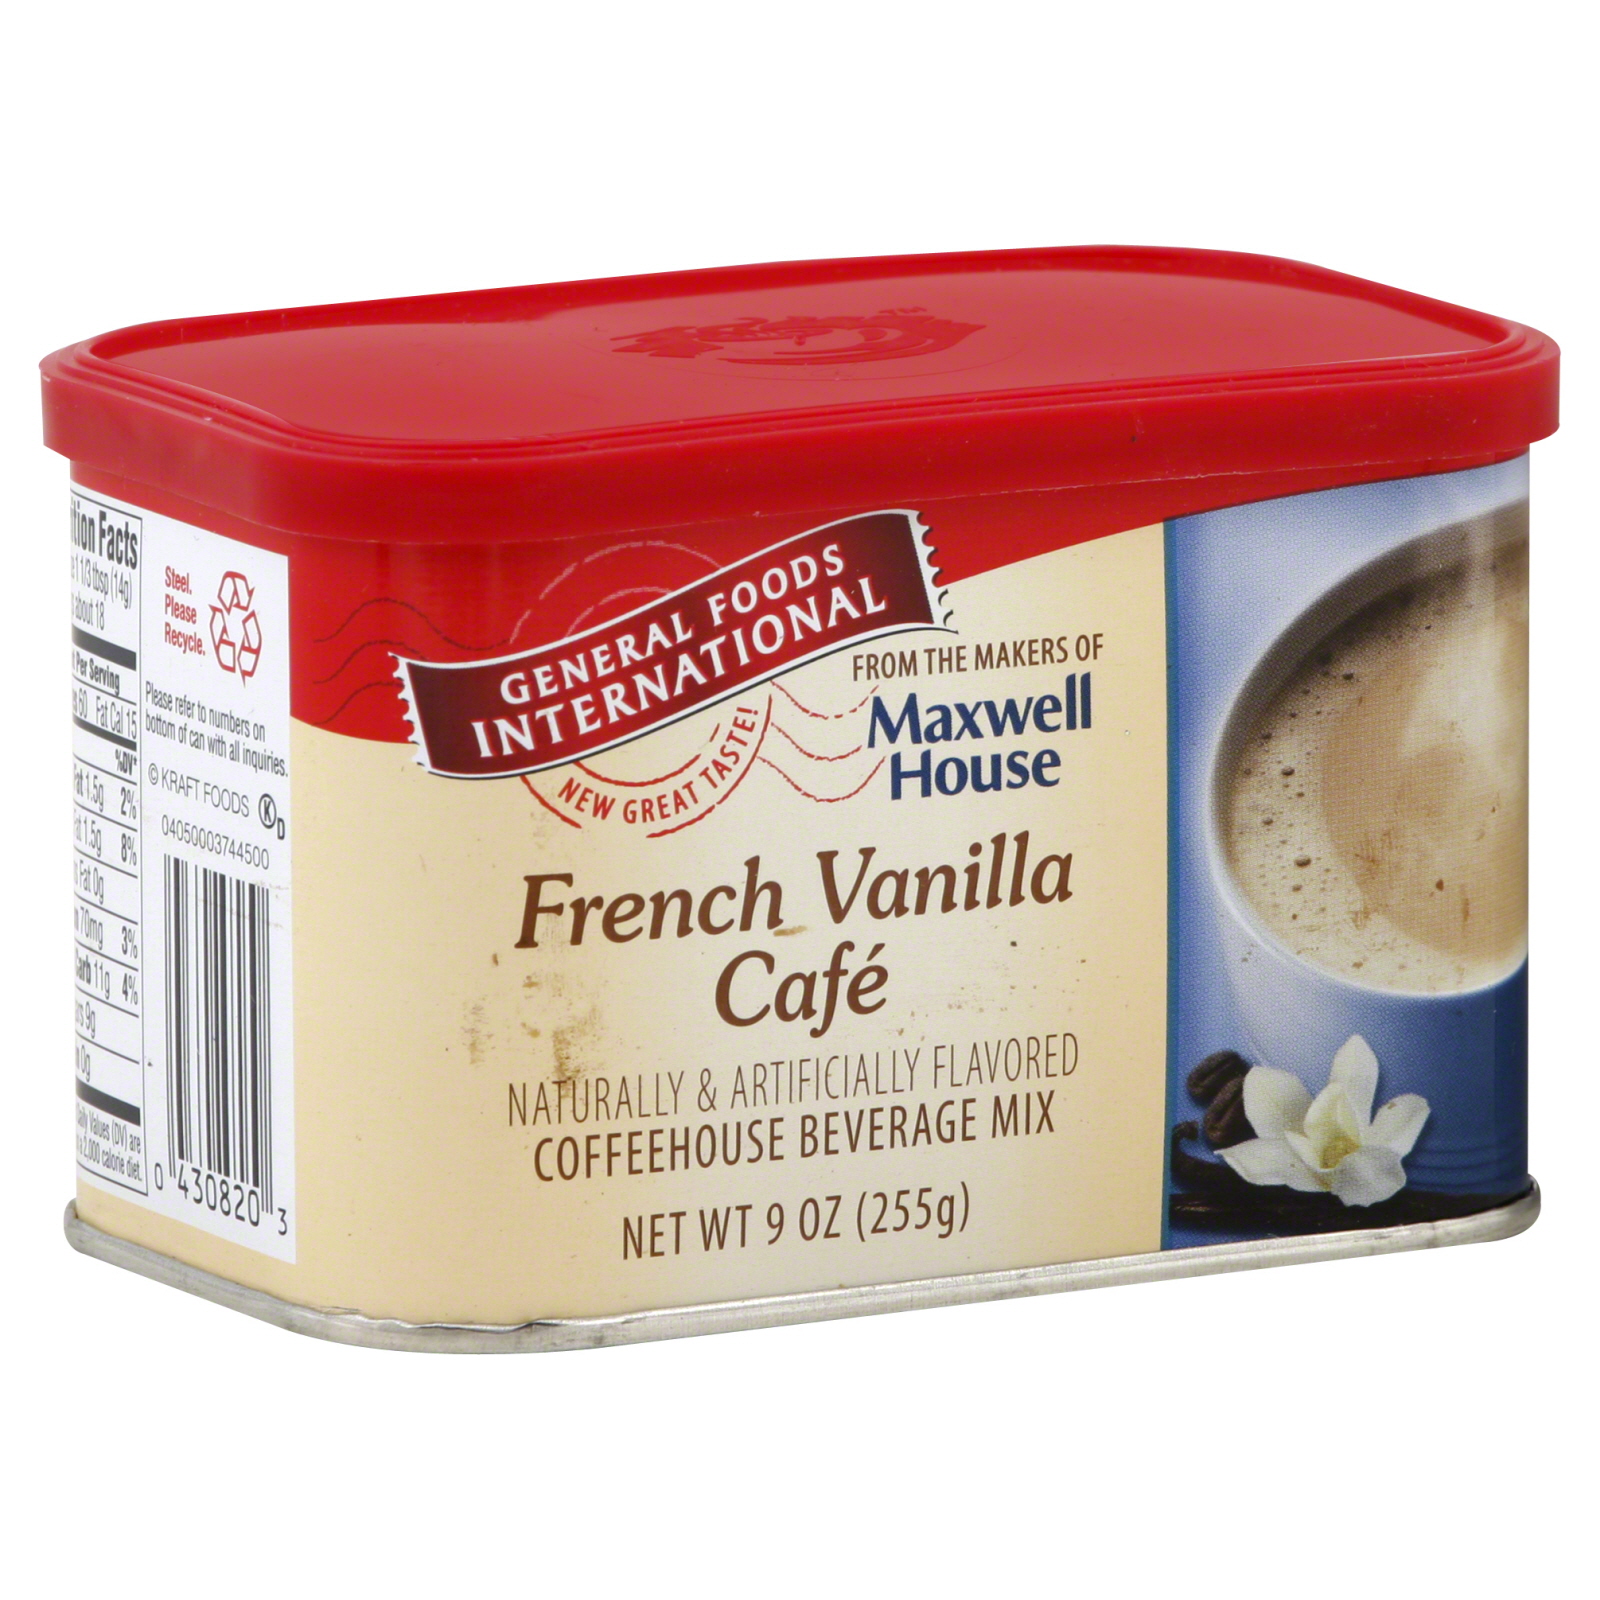 French vanilla. Френч Ванилла. Planto ваниль. Body Cream ванильное кофейни. Свишер Свитс ваниль.